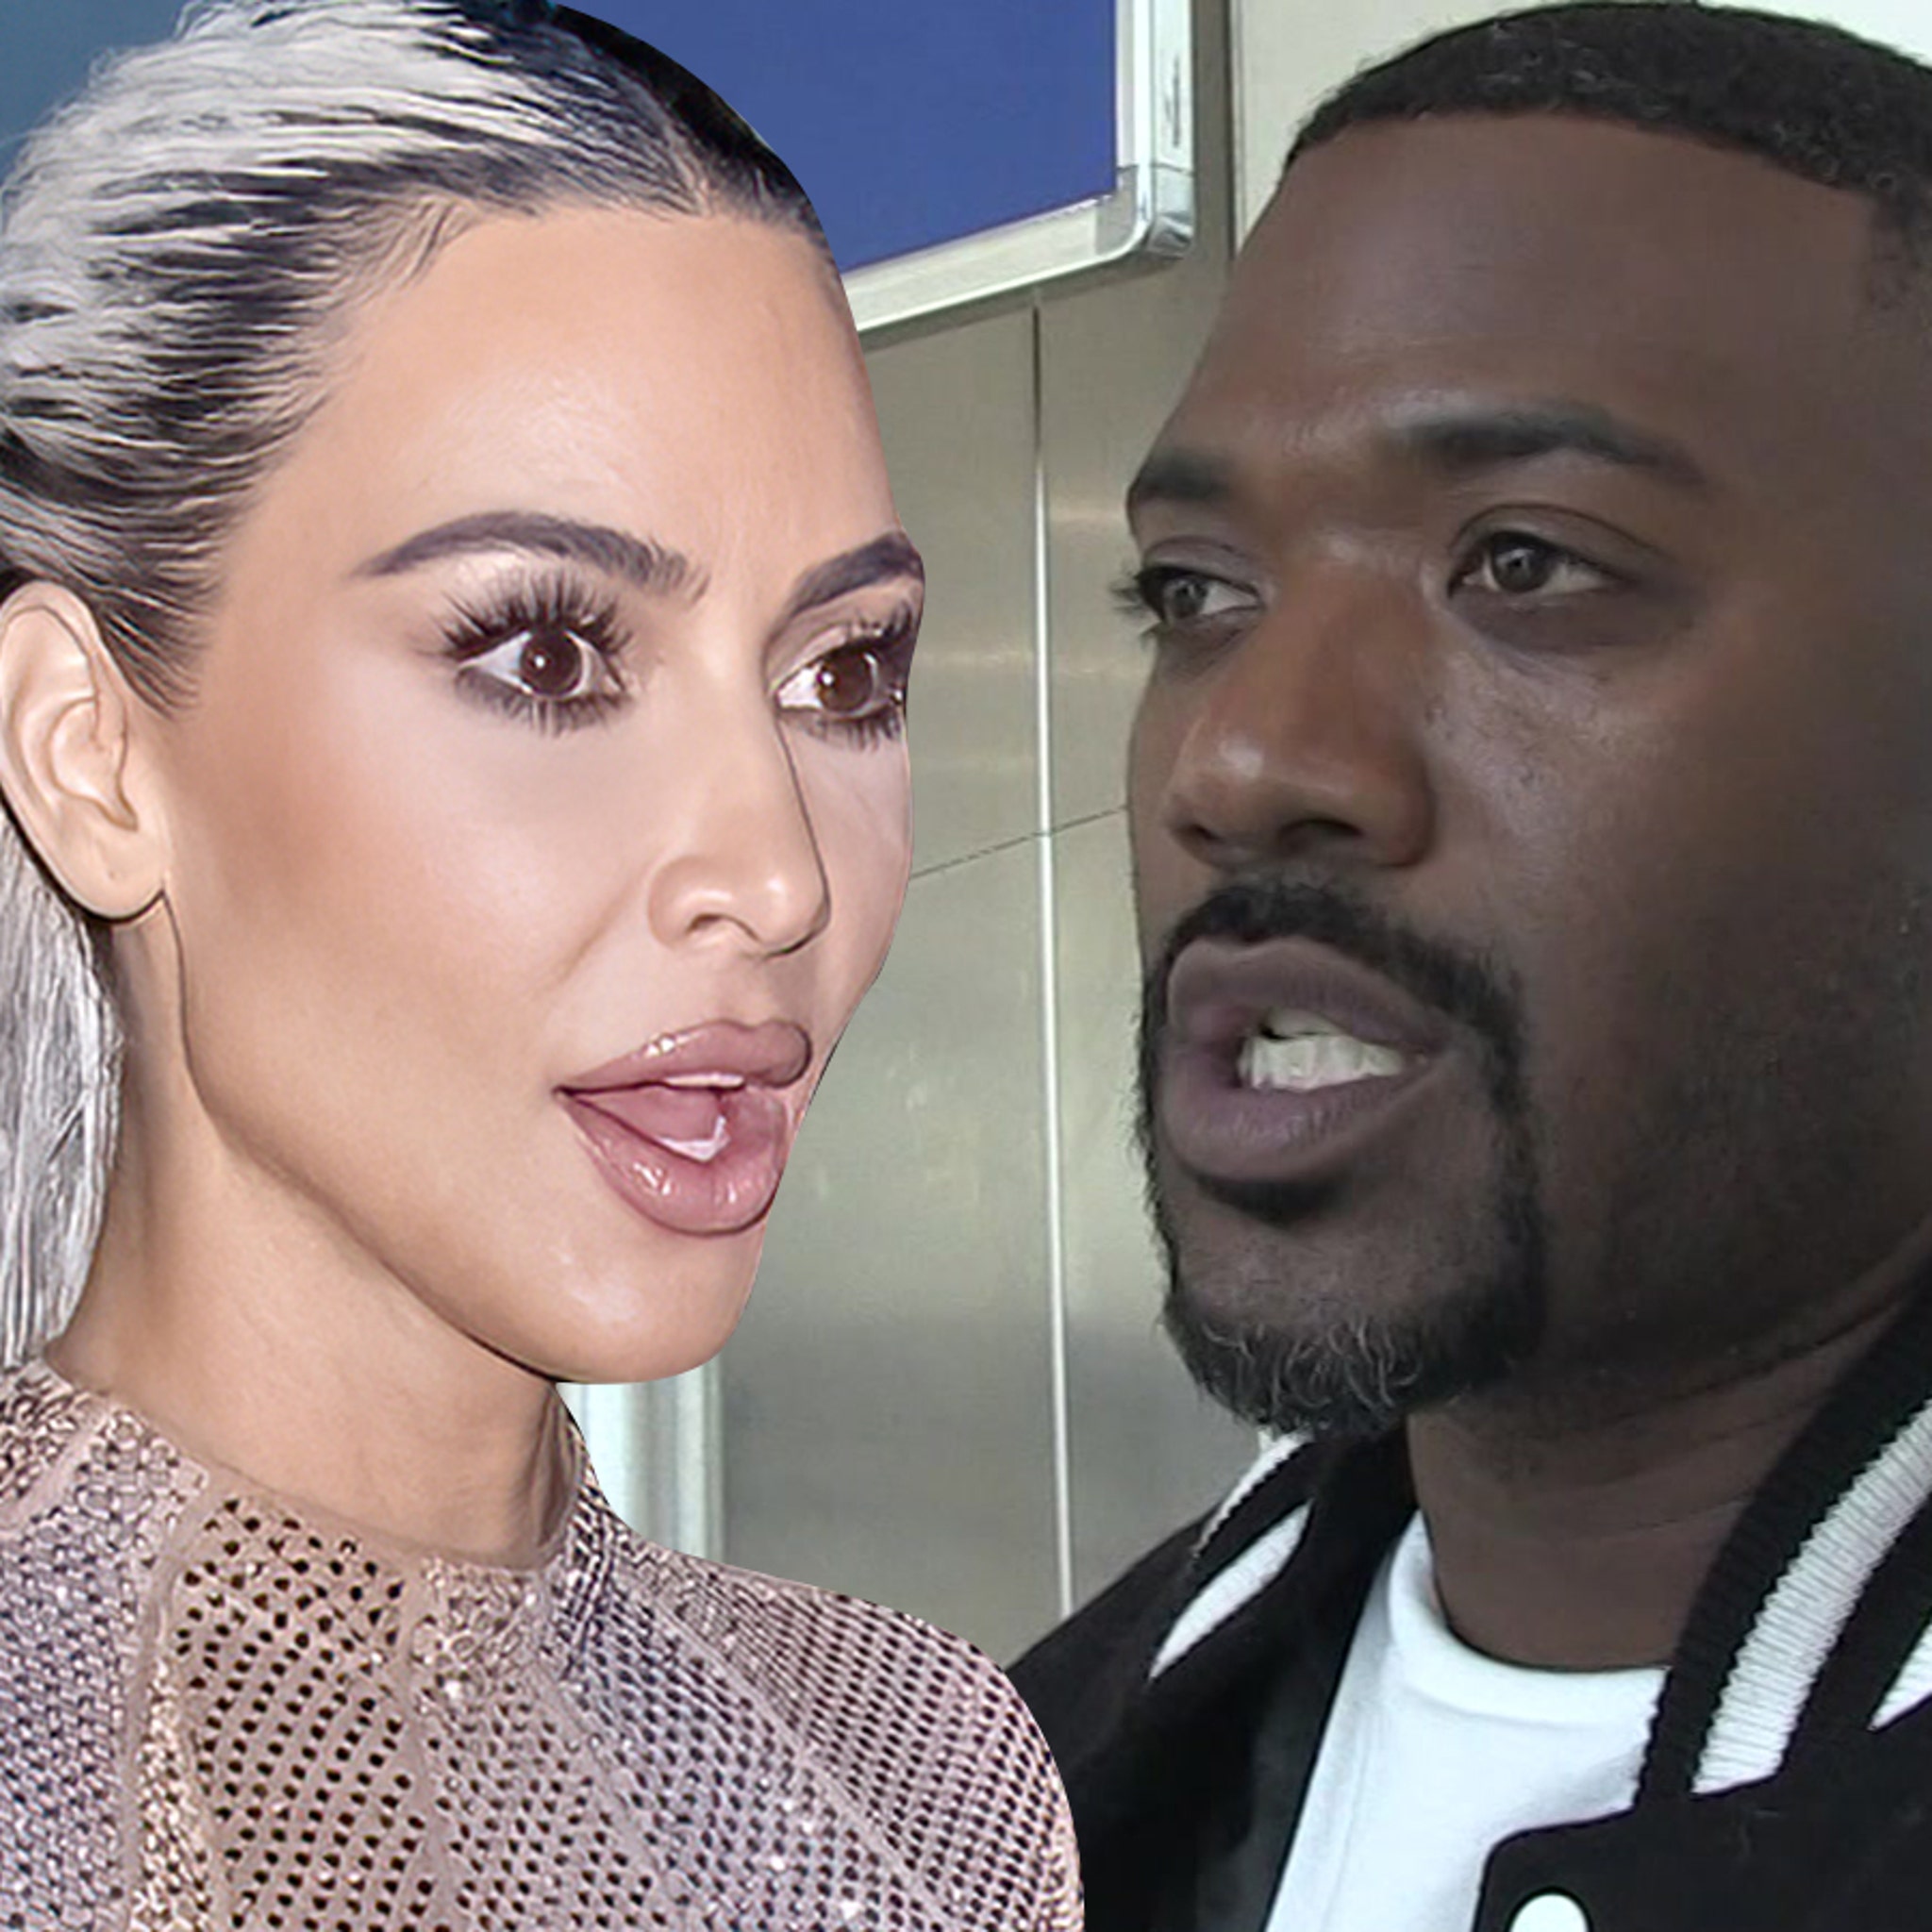 Kim Kardashian Porn Moviea - Kim Kardashian and Ray J Got Email Early on About Sex Tape Profits